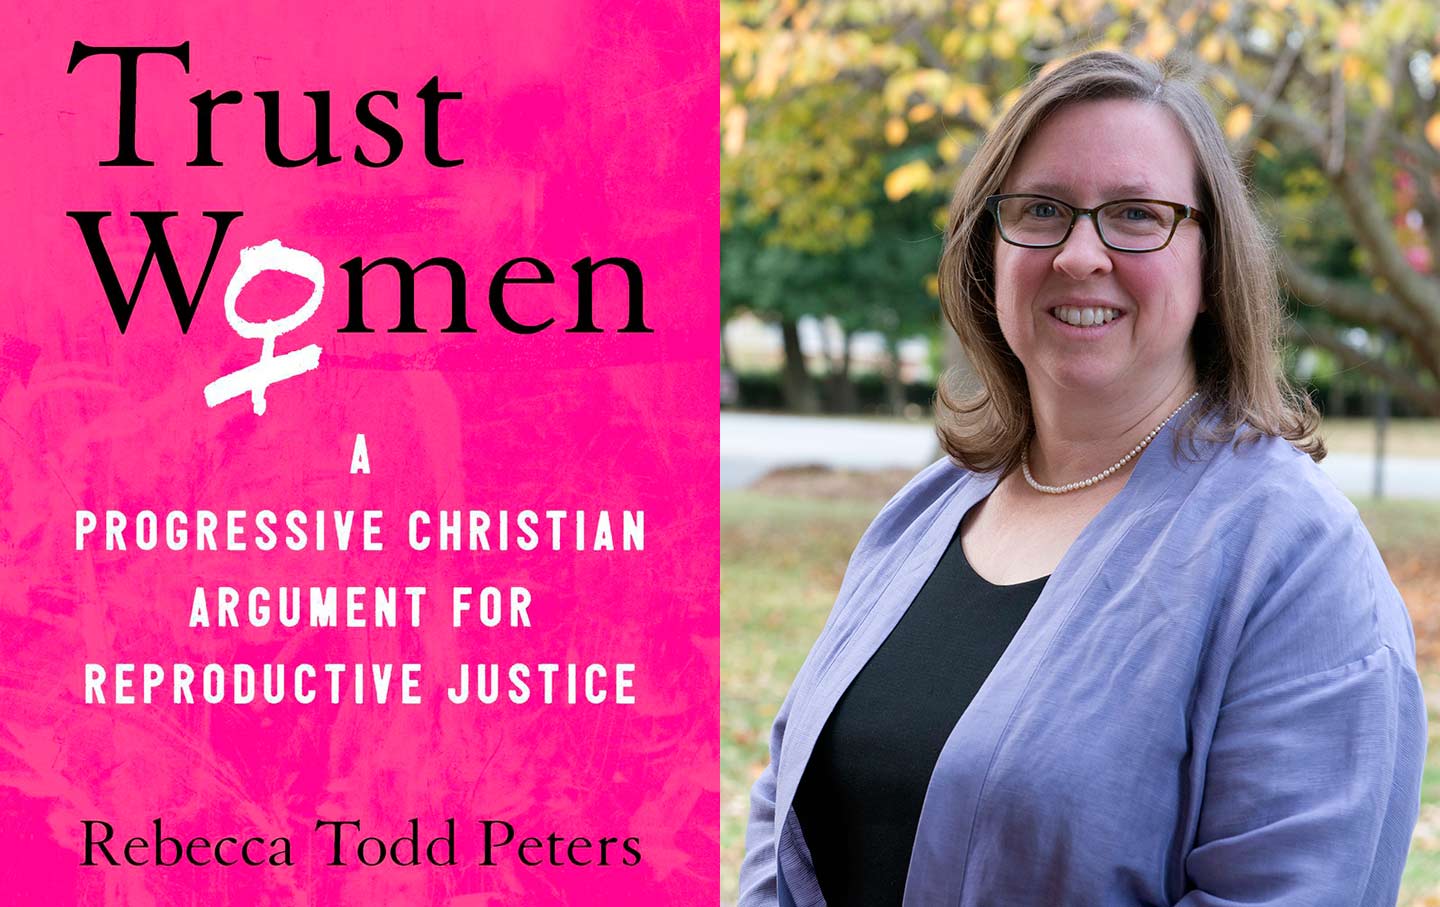 Rebecca Todd Peters, author of Trust Women